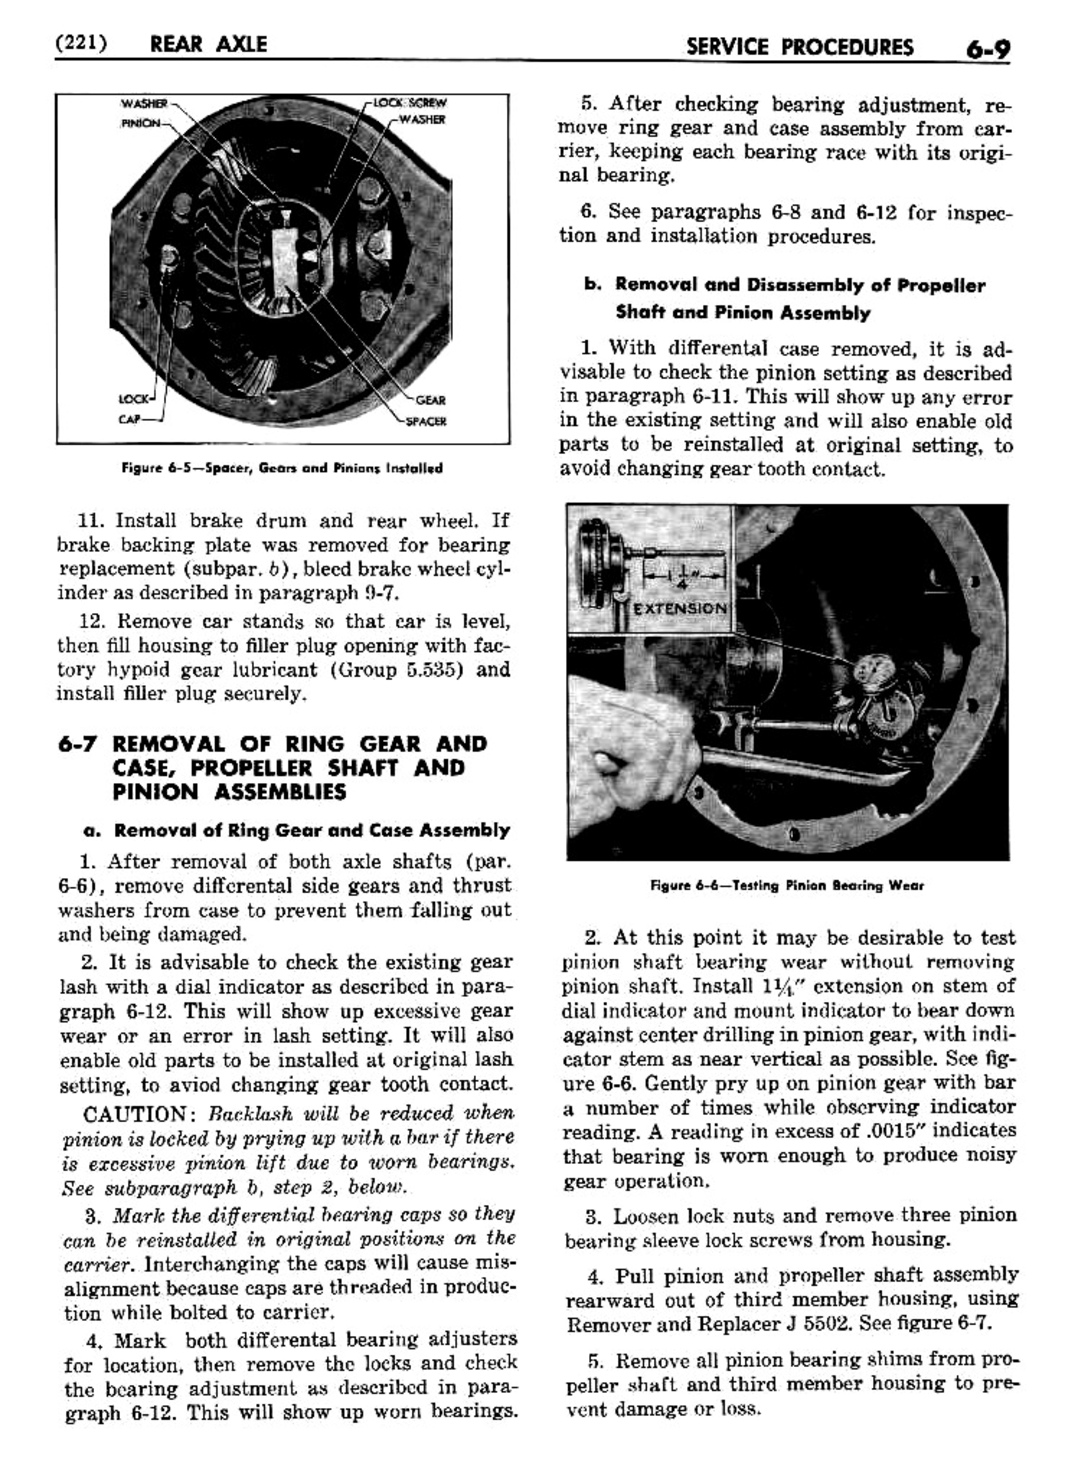 n_07 1954 Buick Shop Manual - Rear Axle-009-009.jpg